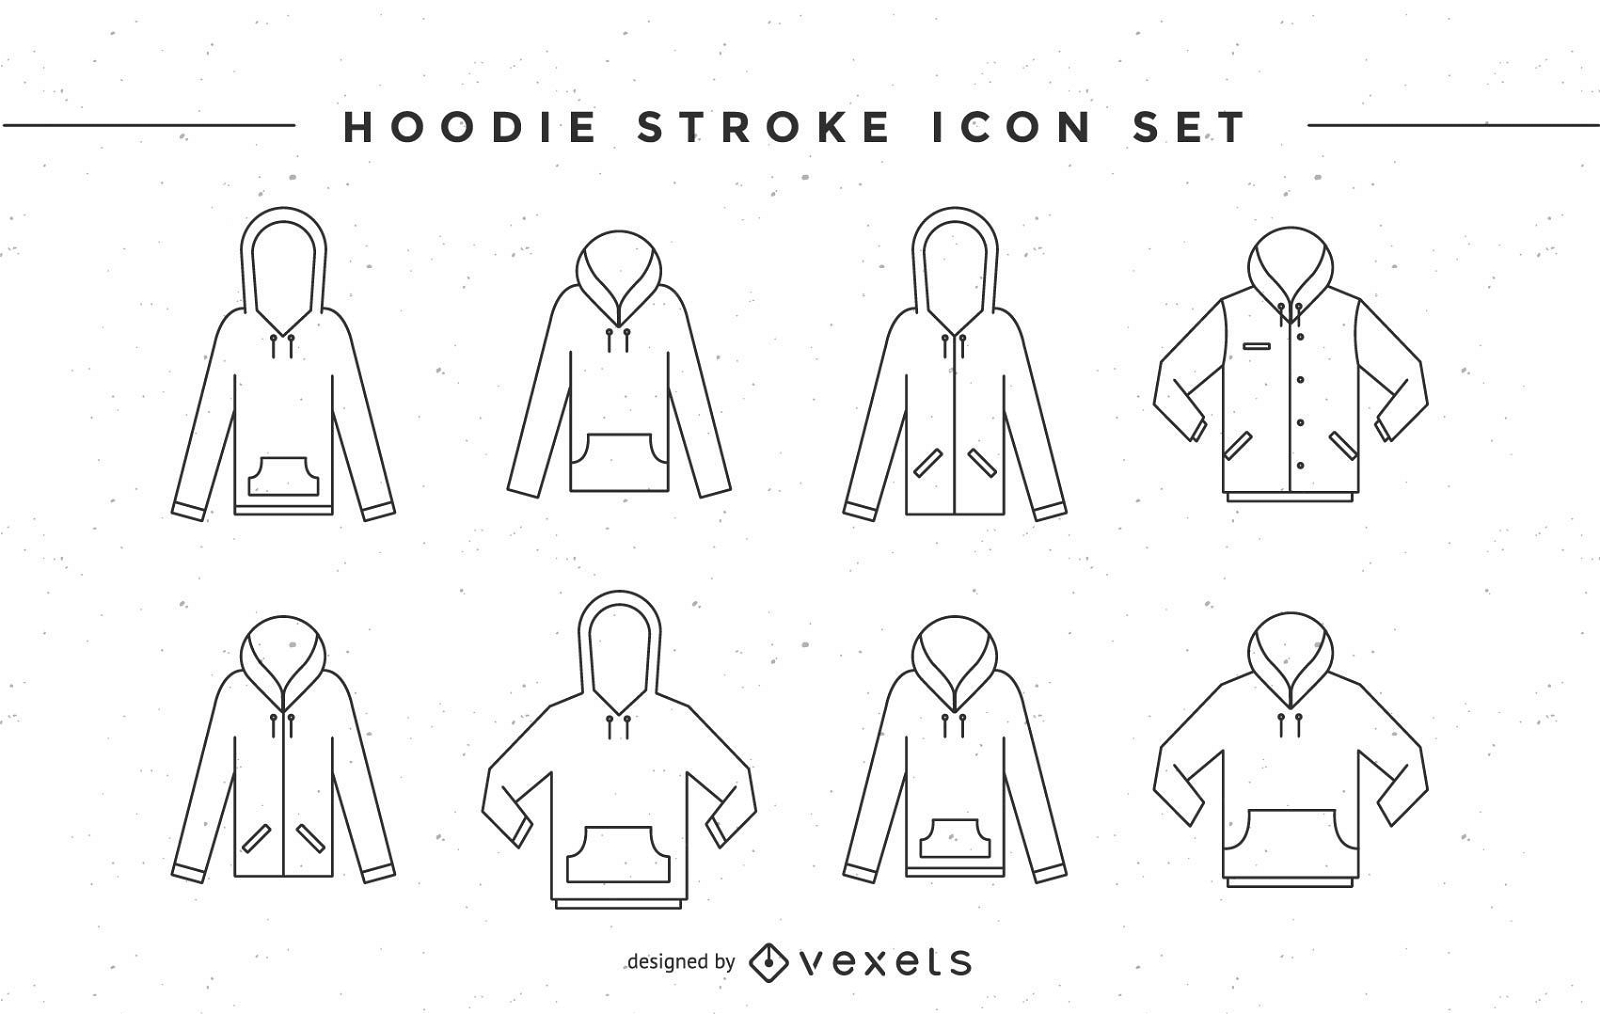 Hoodie stroke icon set